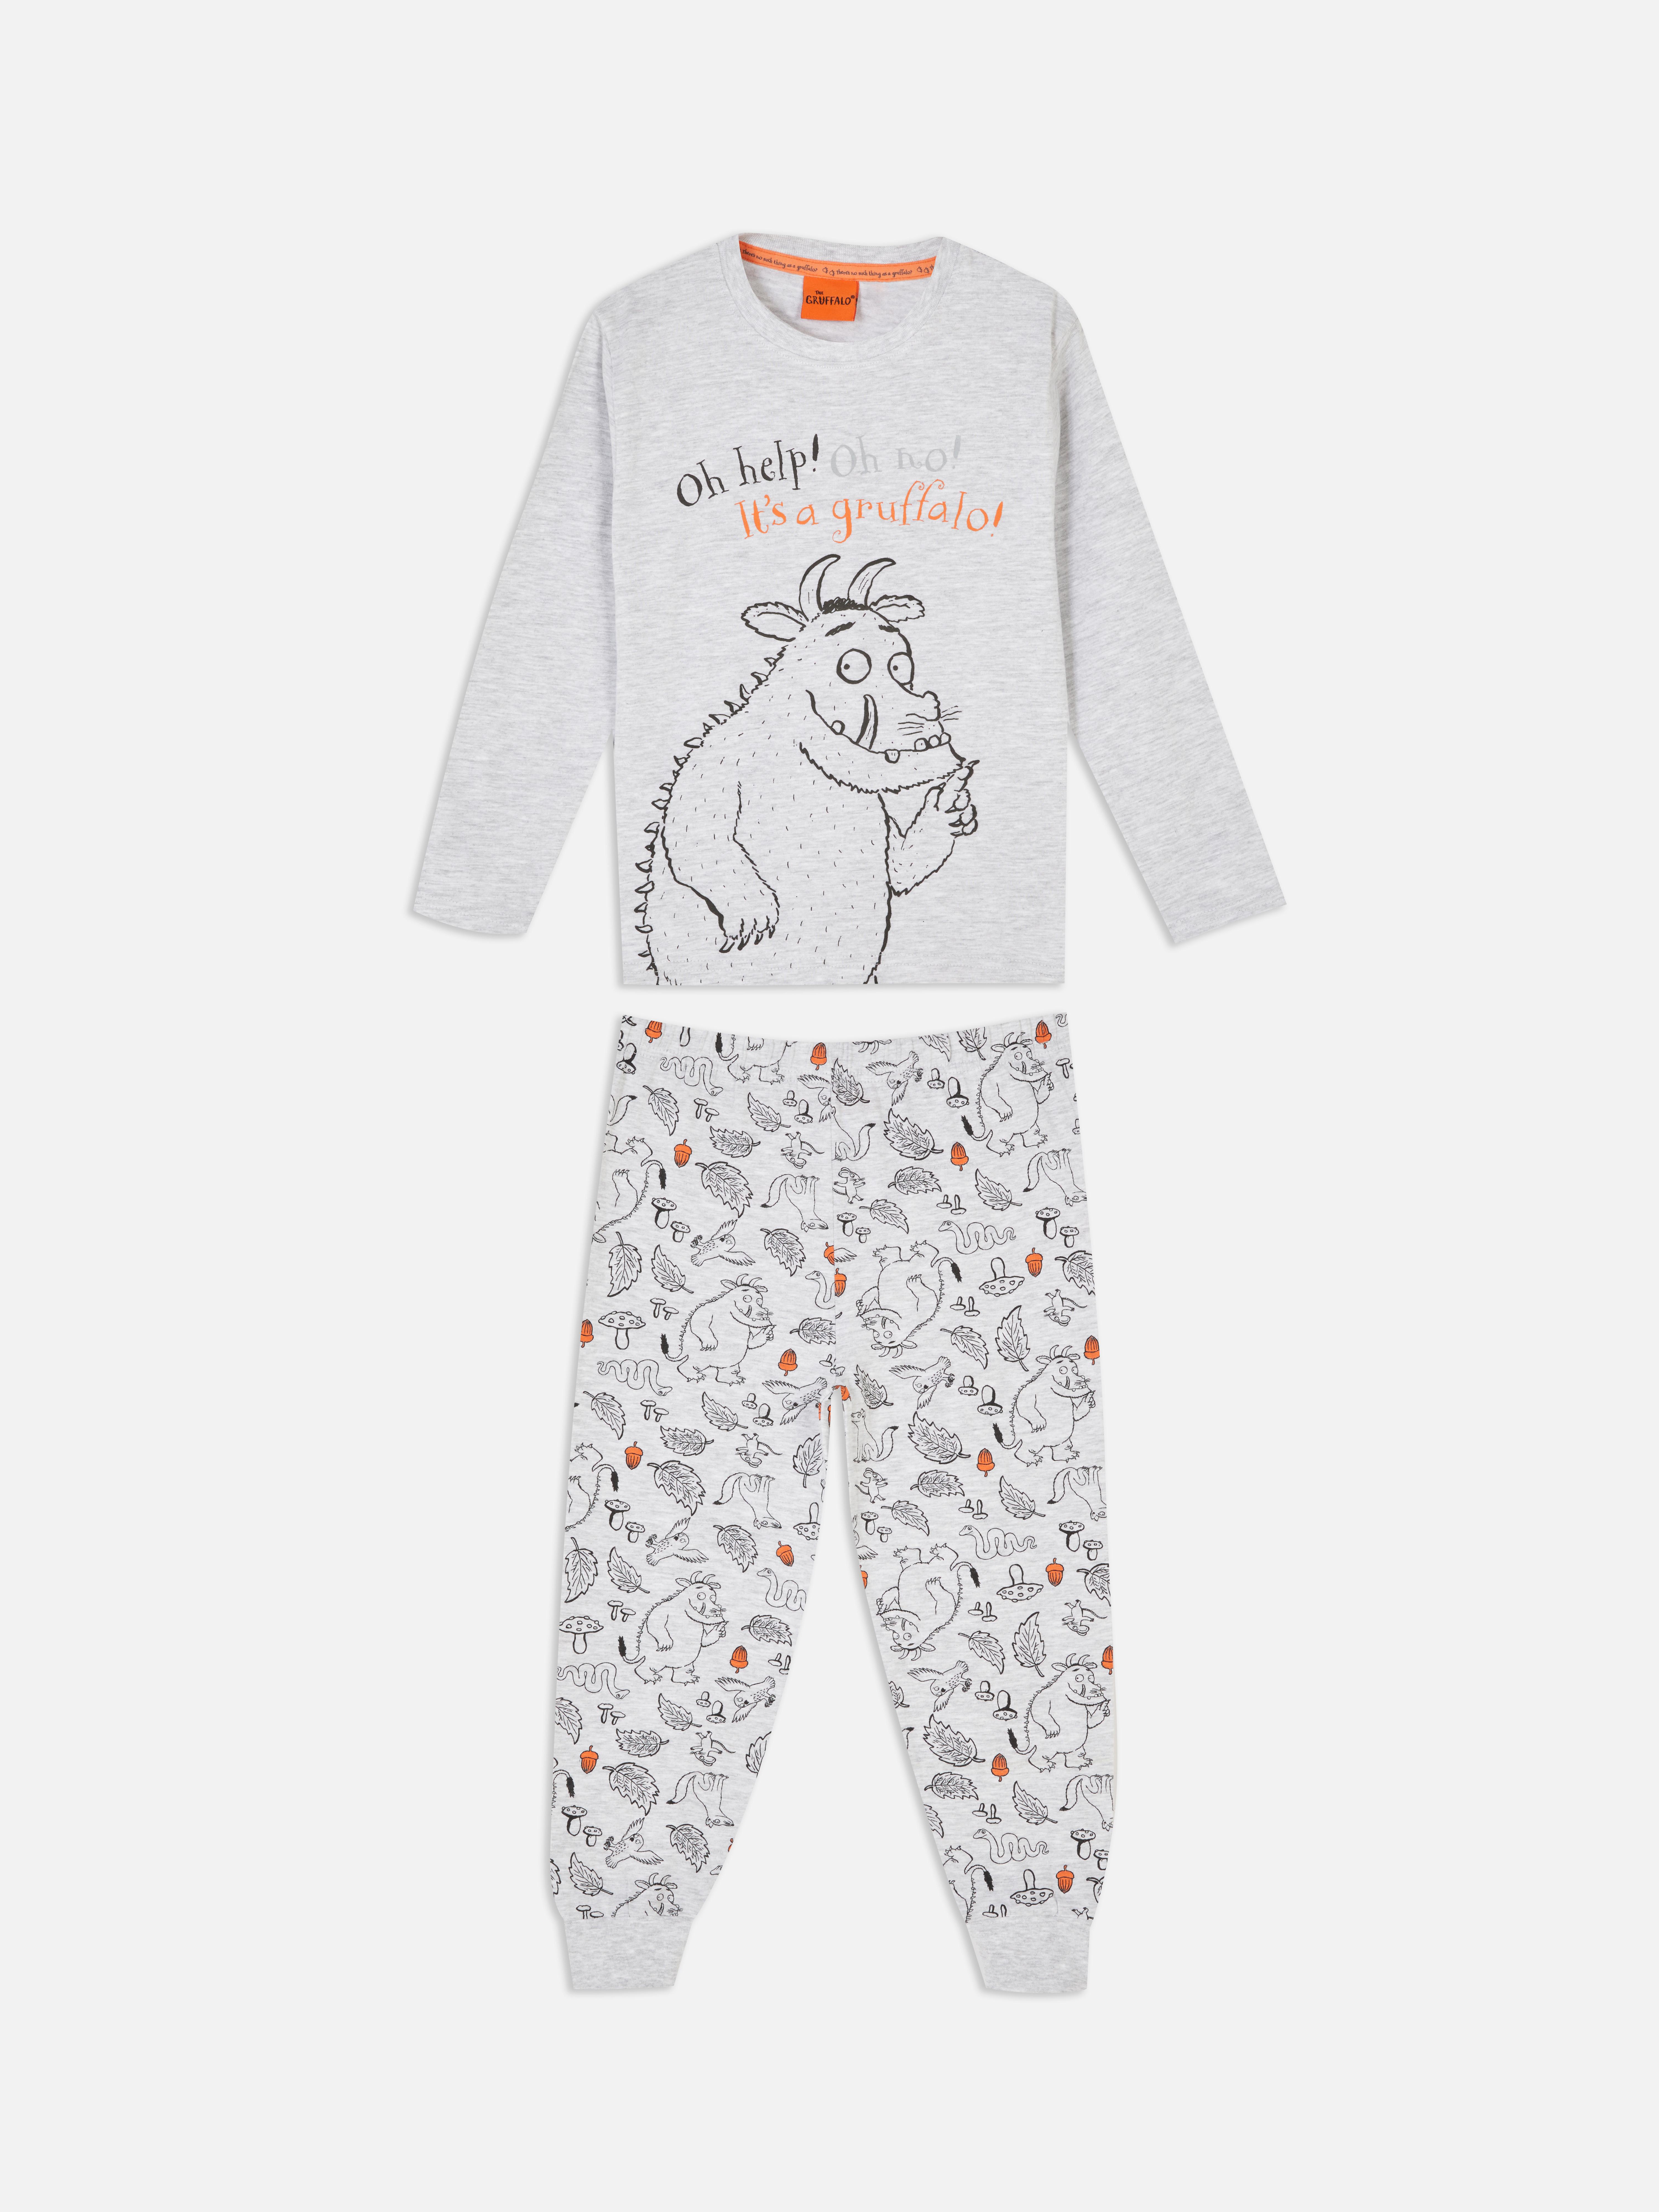 The Gruffalo Printed Pyjama Set